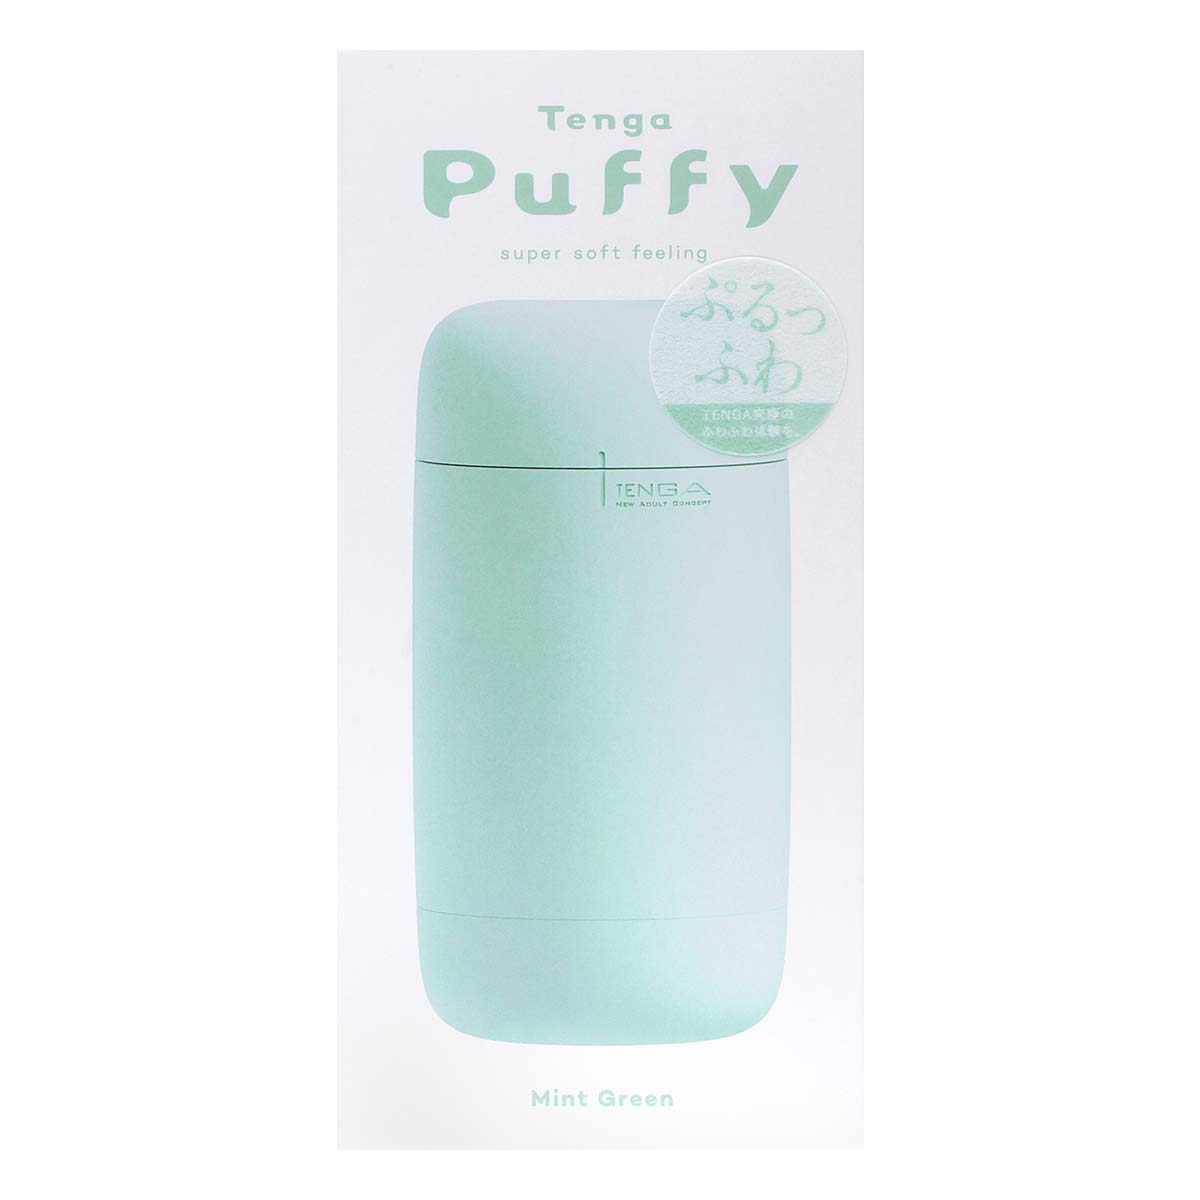 TENGA Puffy Mint Green